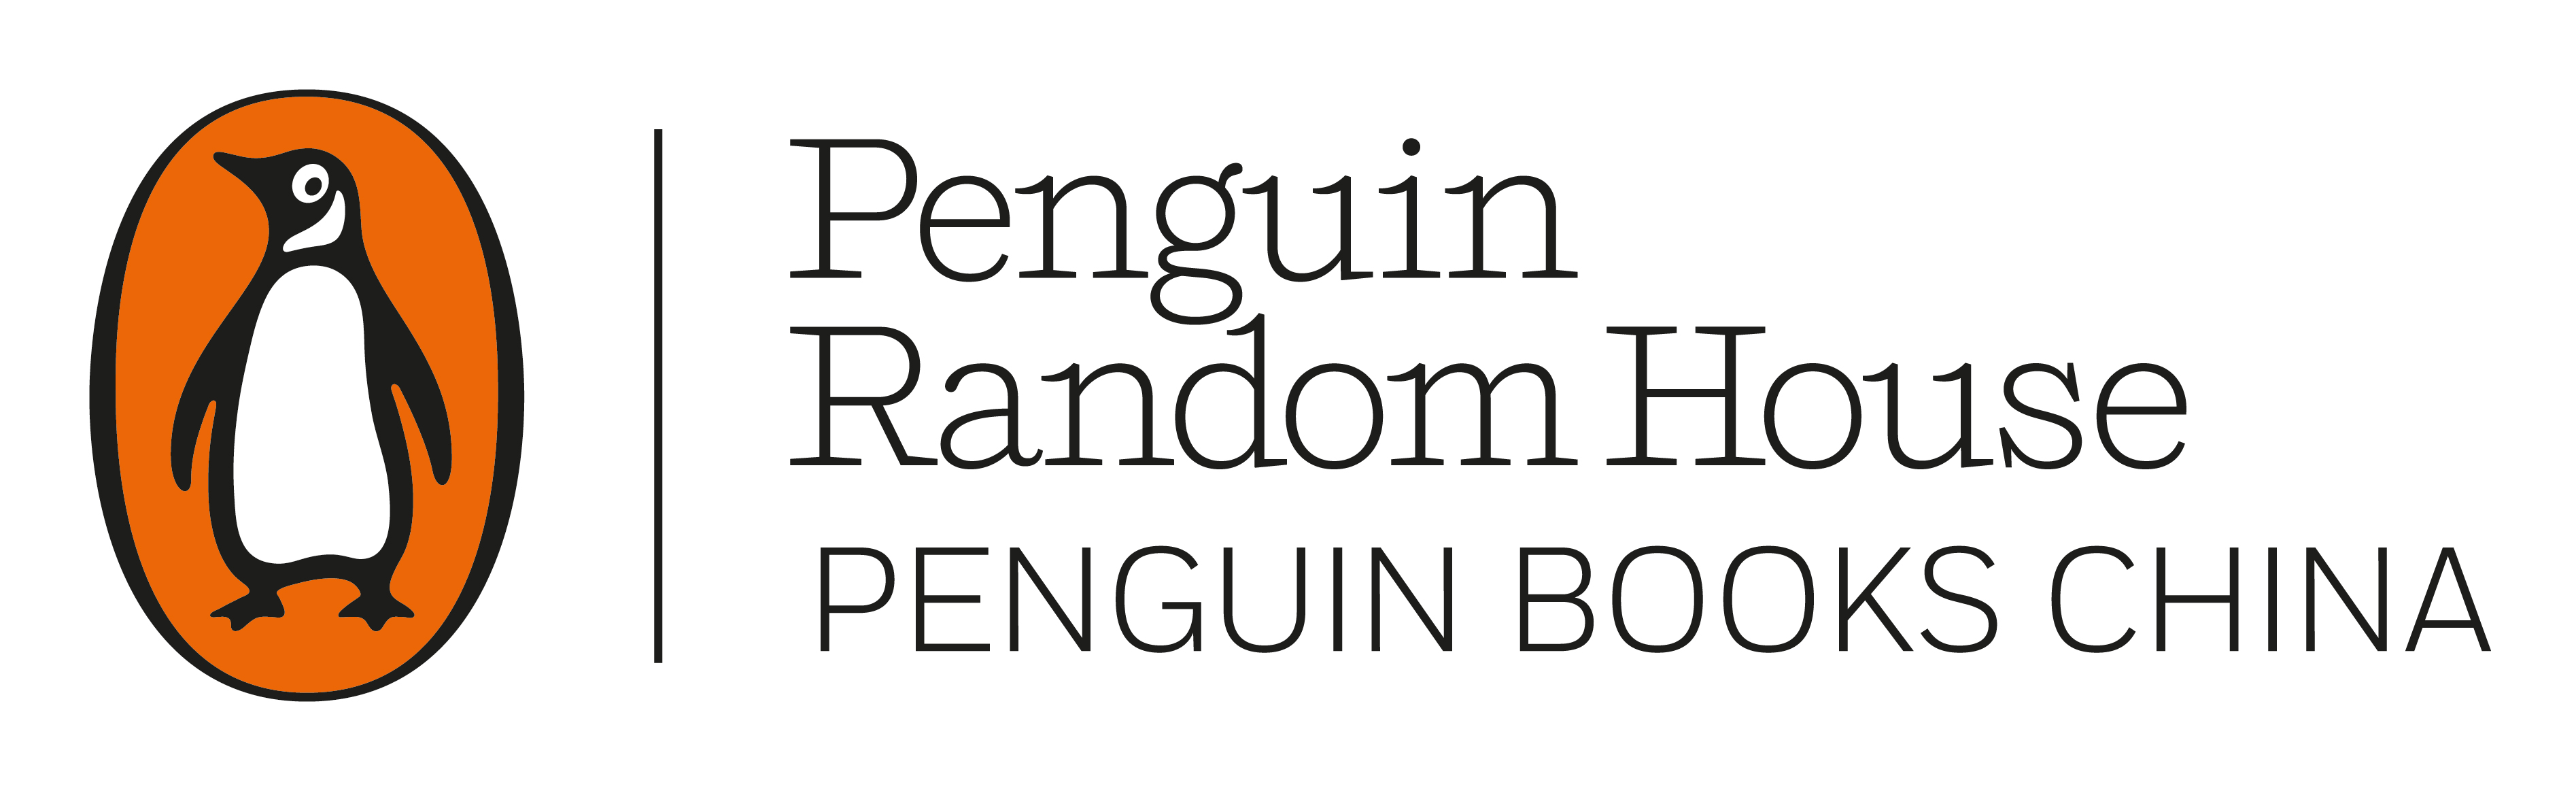 Penguin Books China